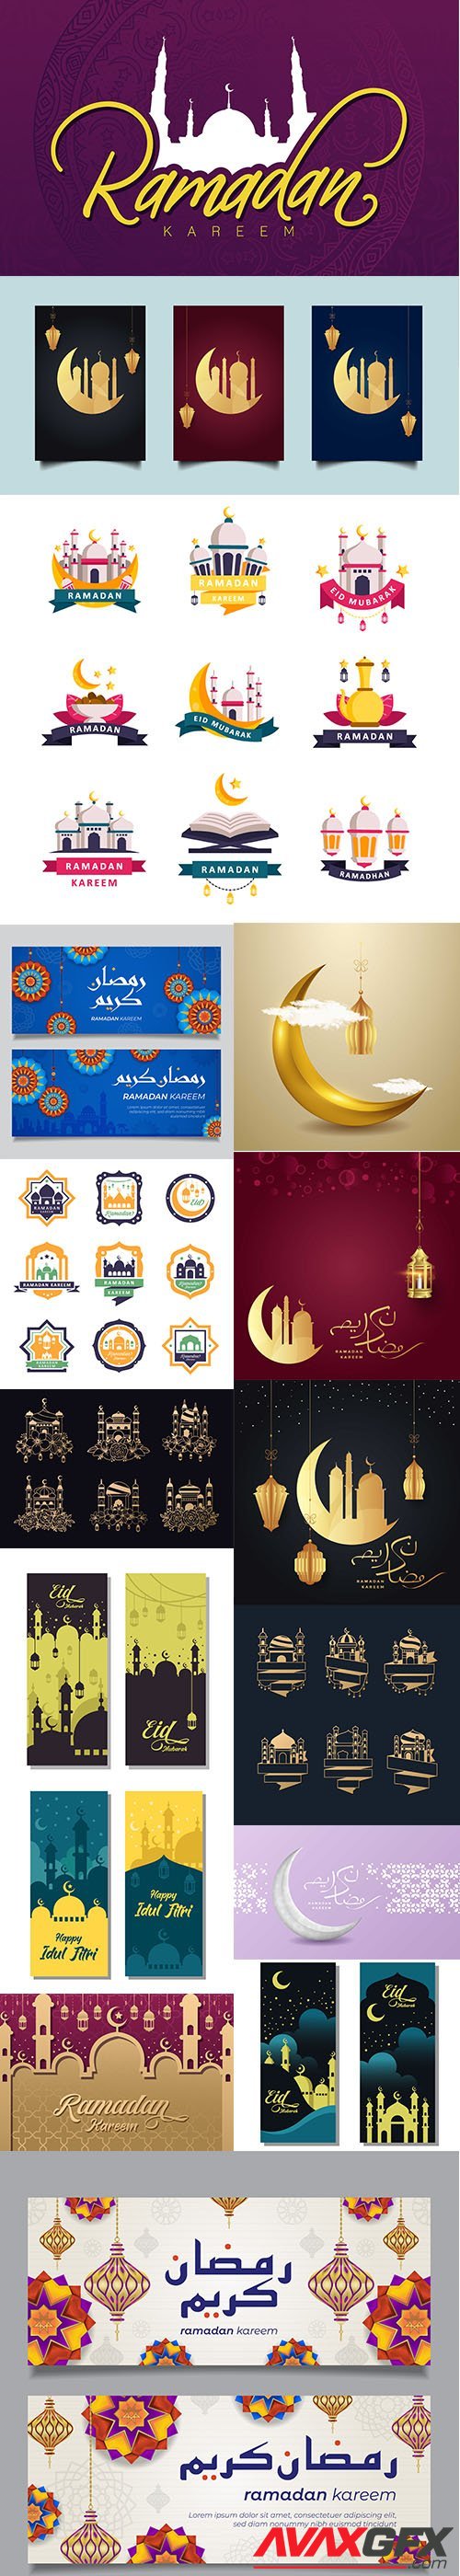 Ramadan Kareem Illustration and Banner